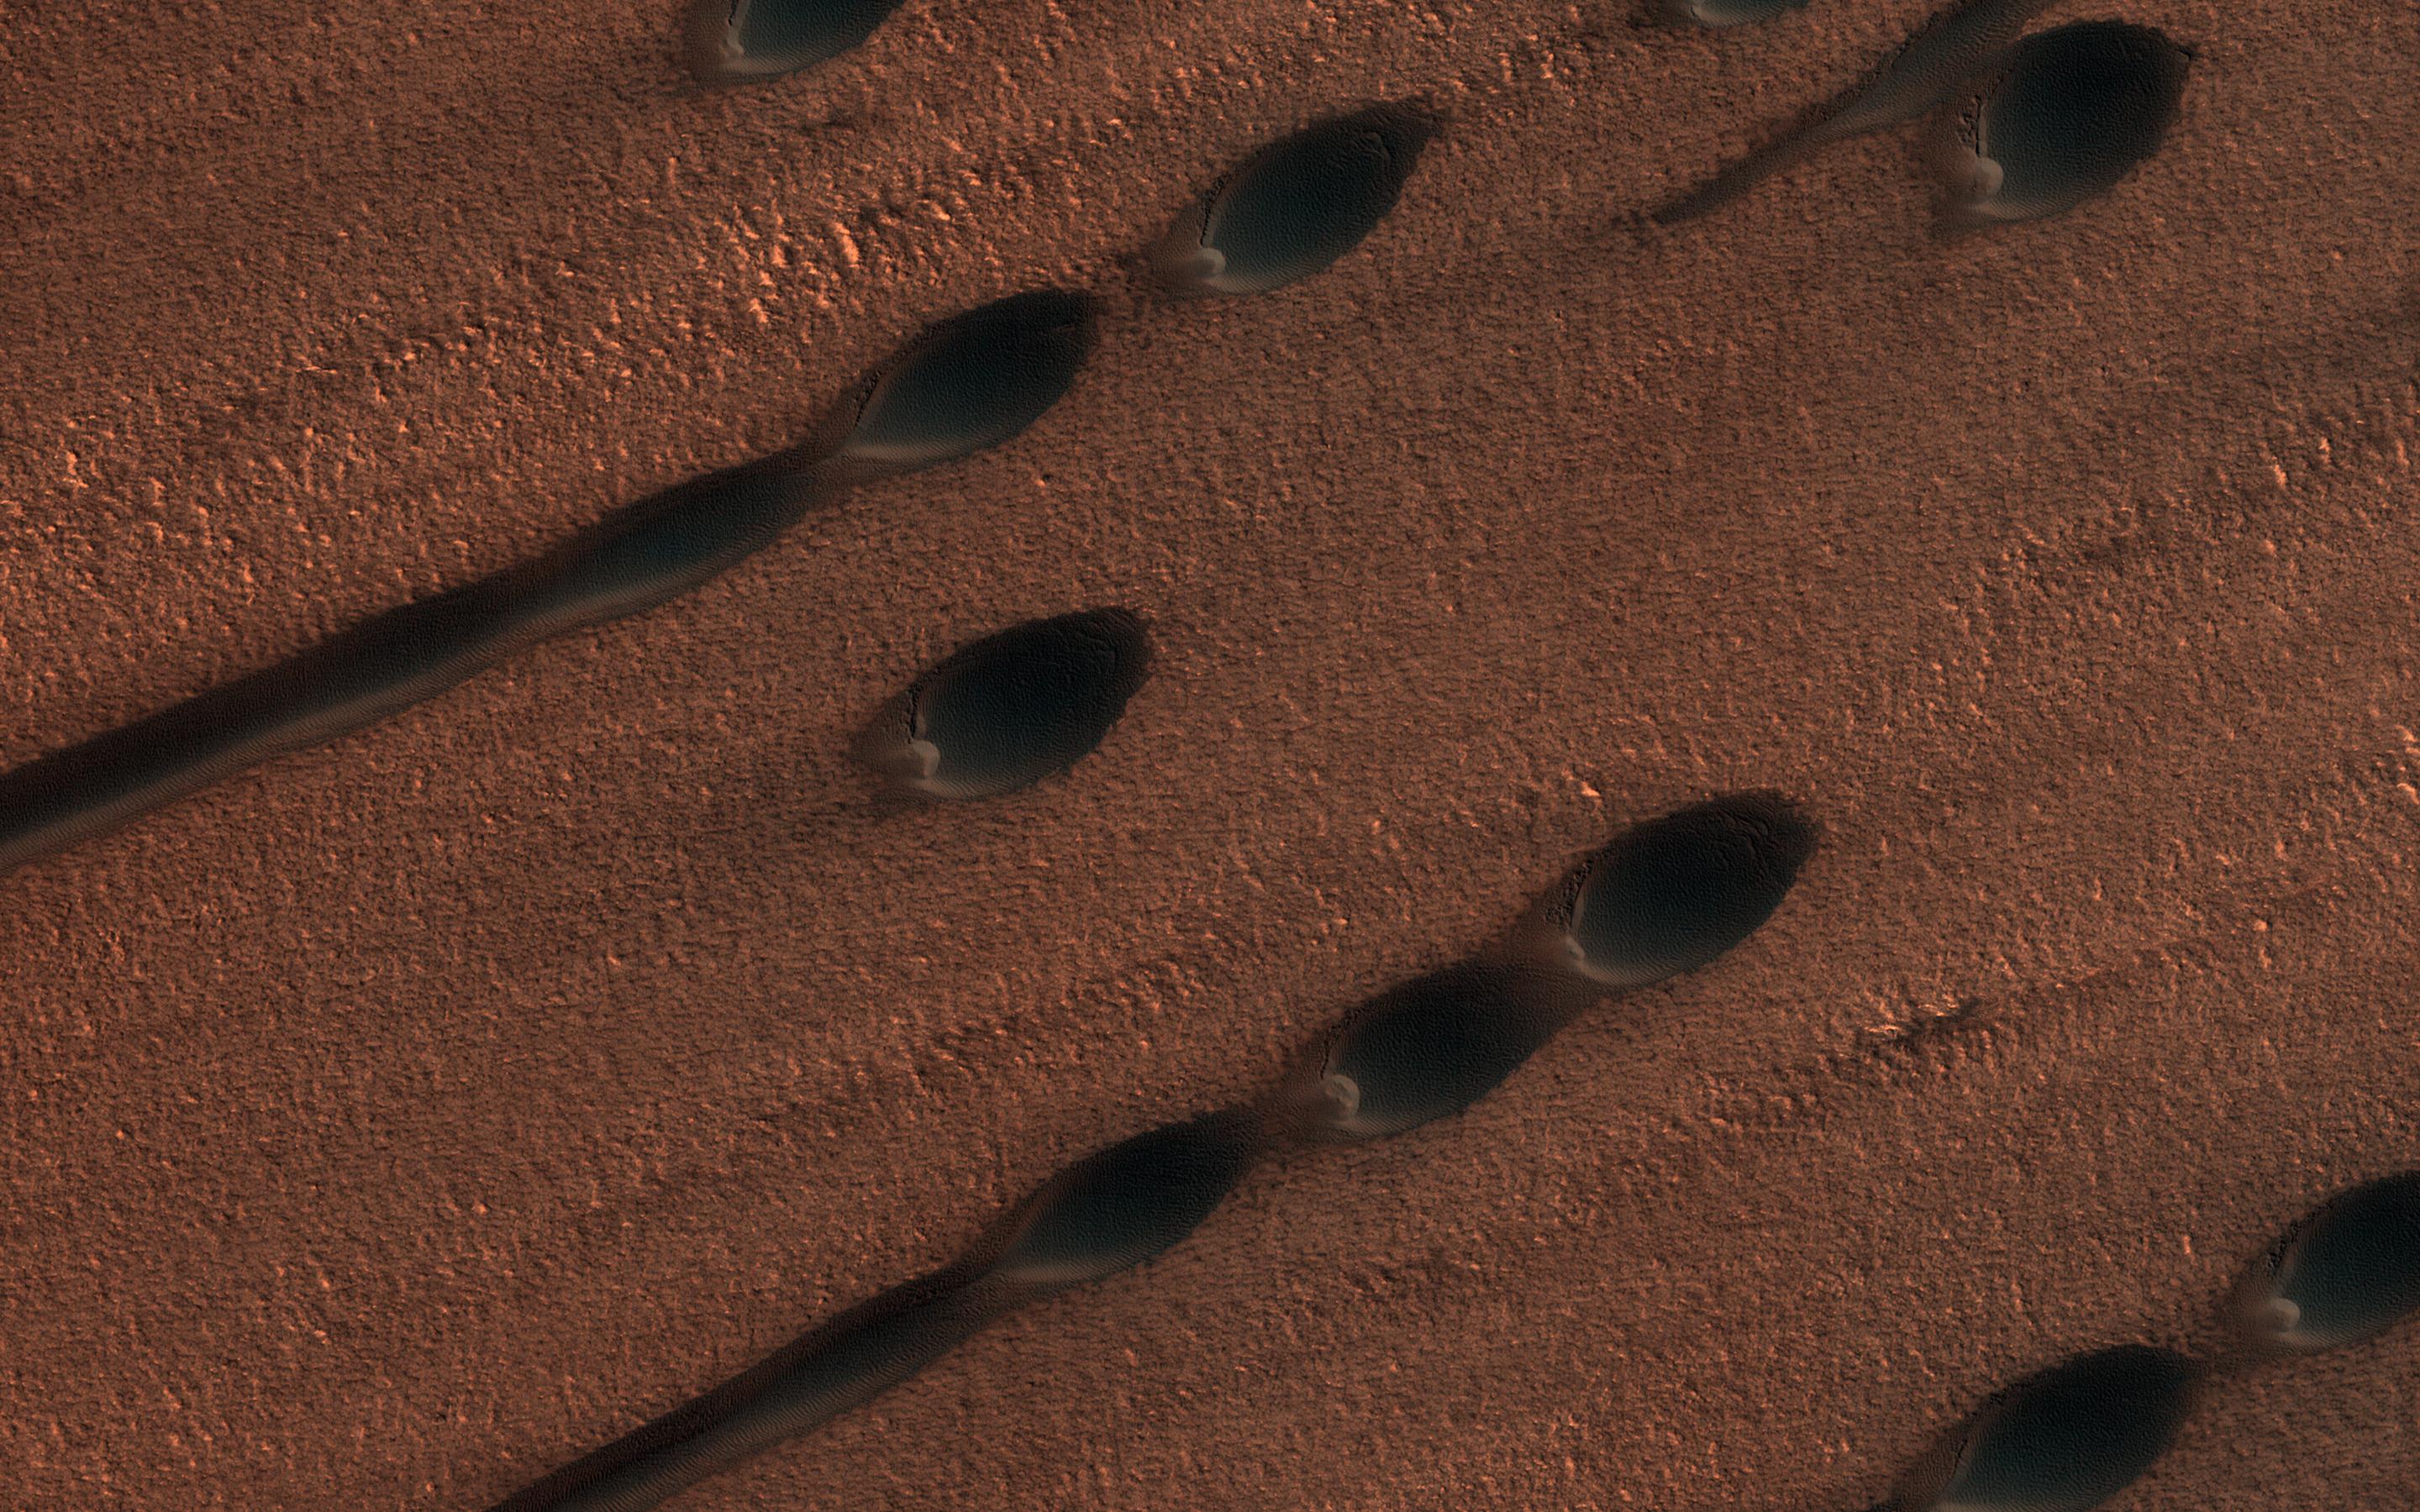 Martian Barchan Dunes